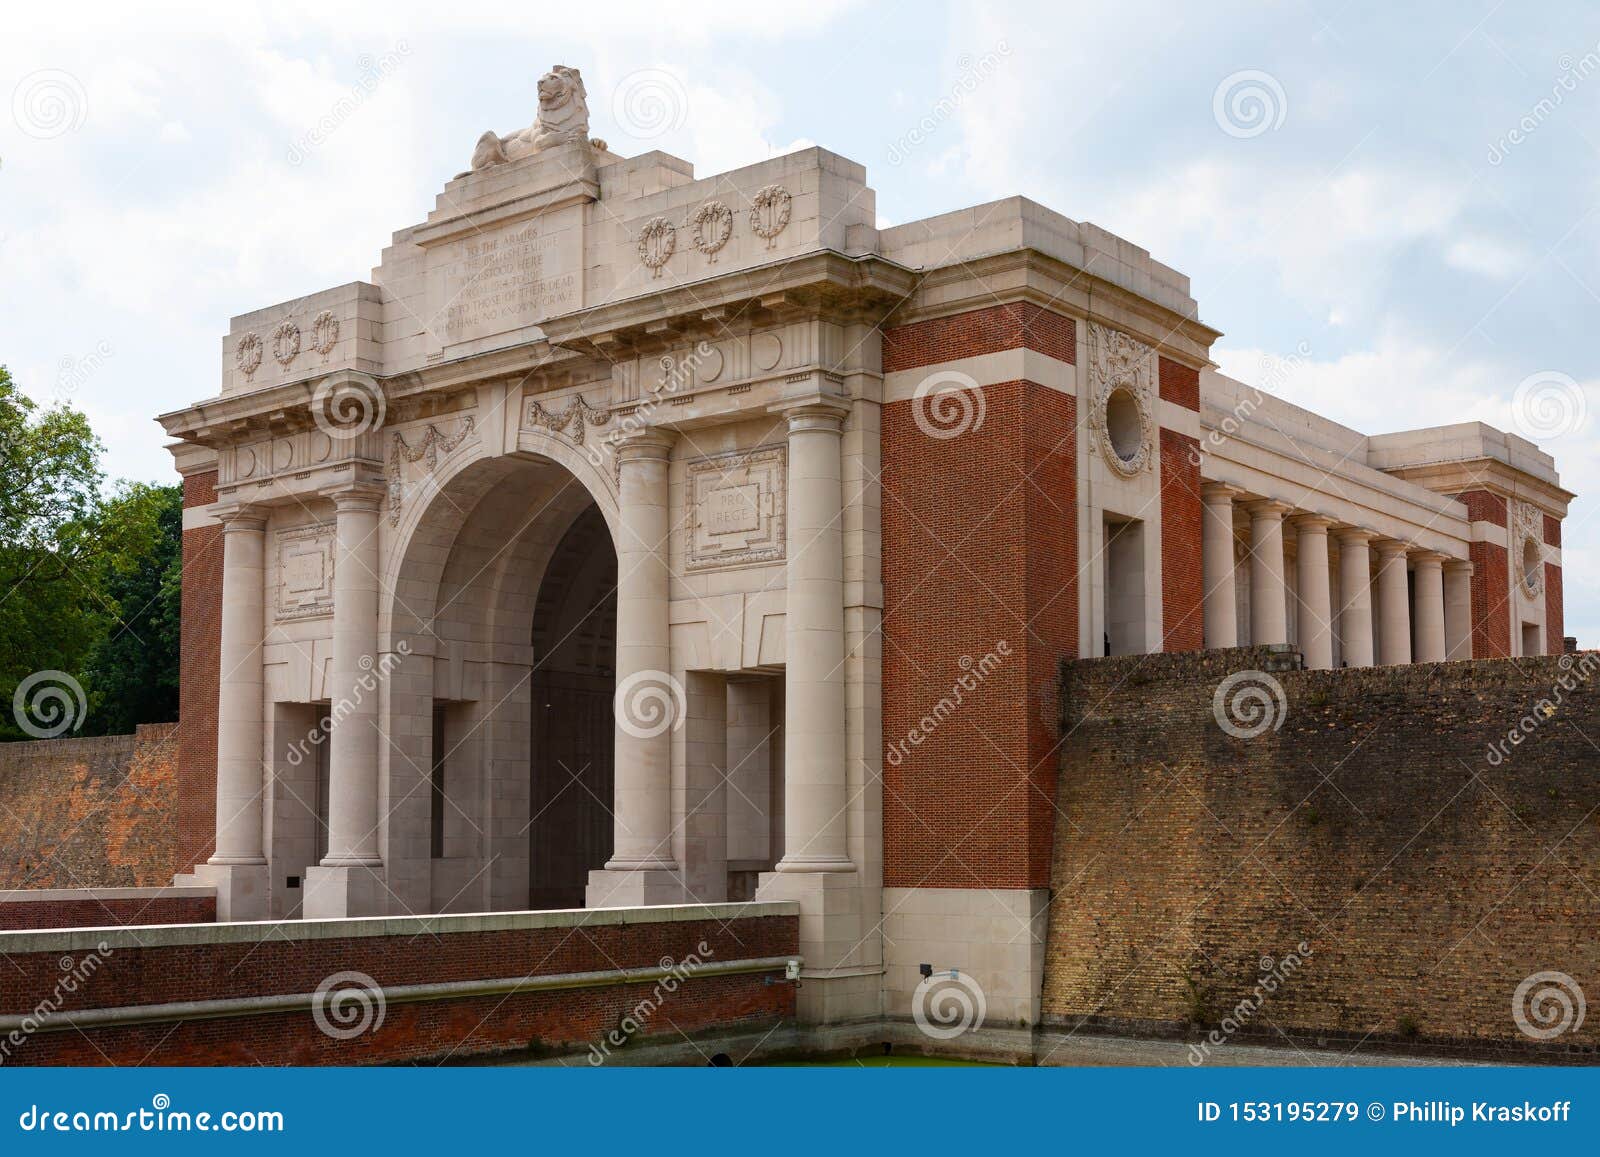 Menin Gate, Ypres, Ieper, Belgium Stock Image - Image of europe ...